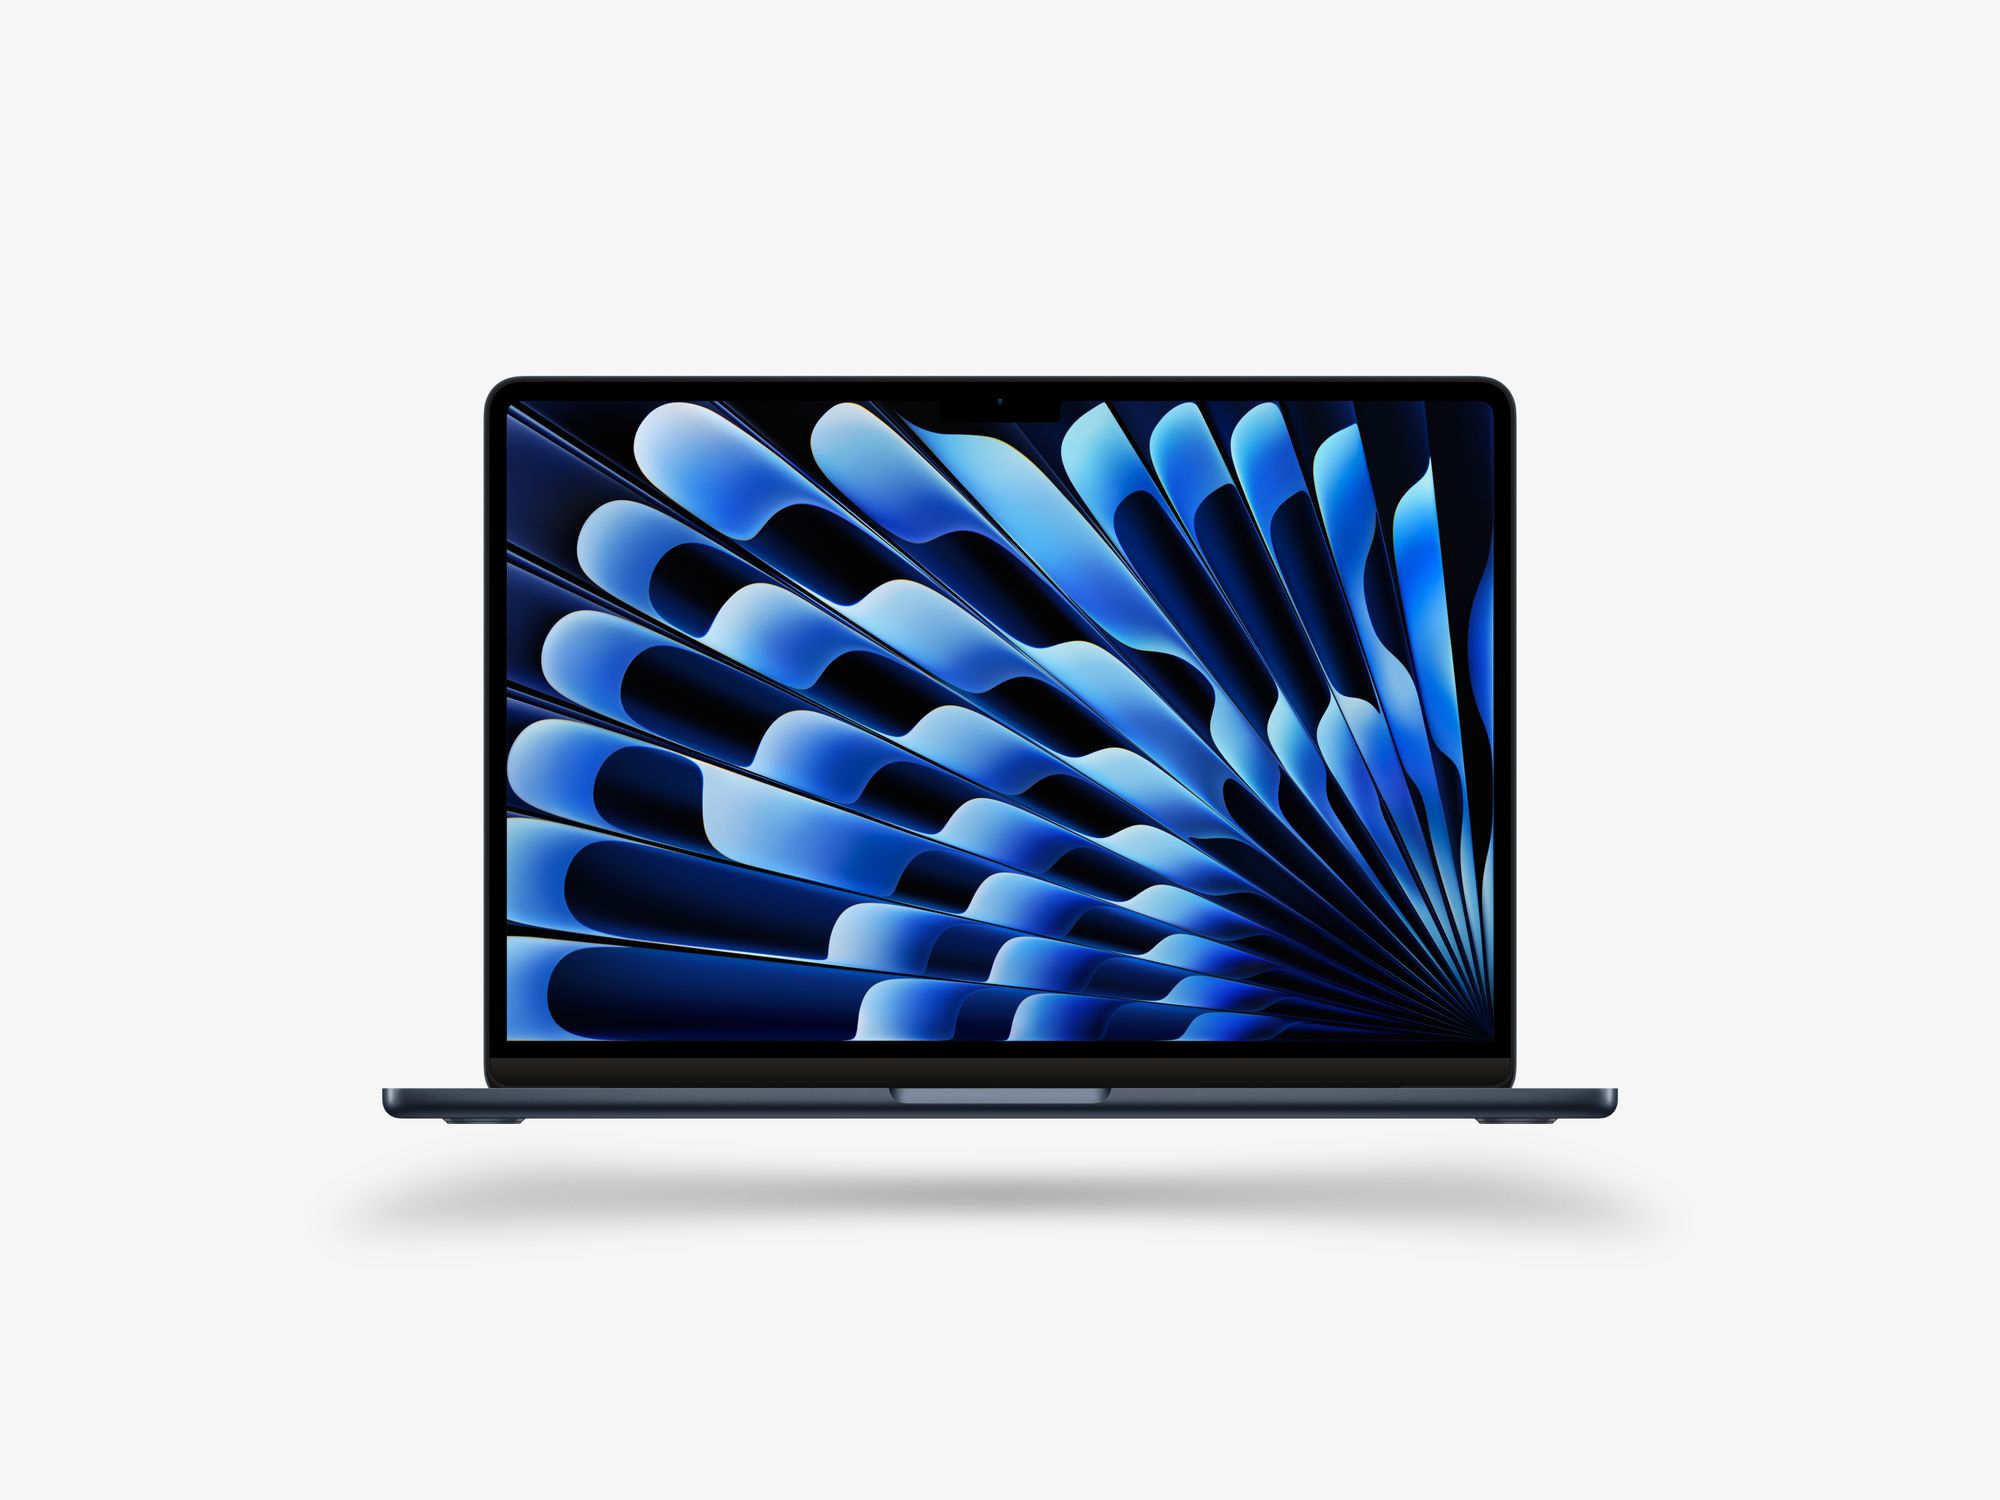 Descarrega já os wallpapers do novo MacBook Air de 15 polegadas post image